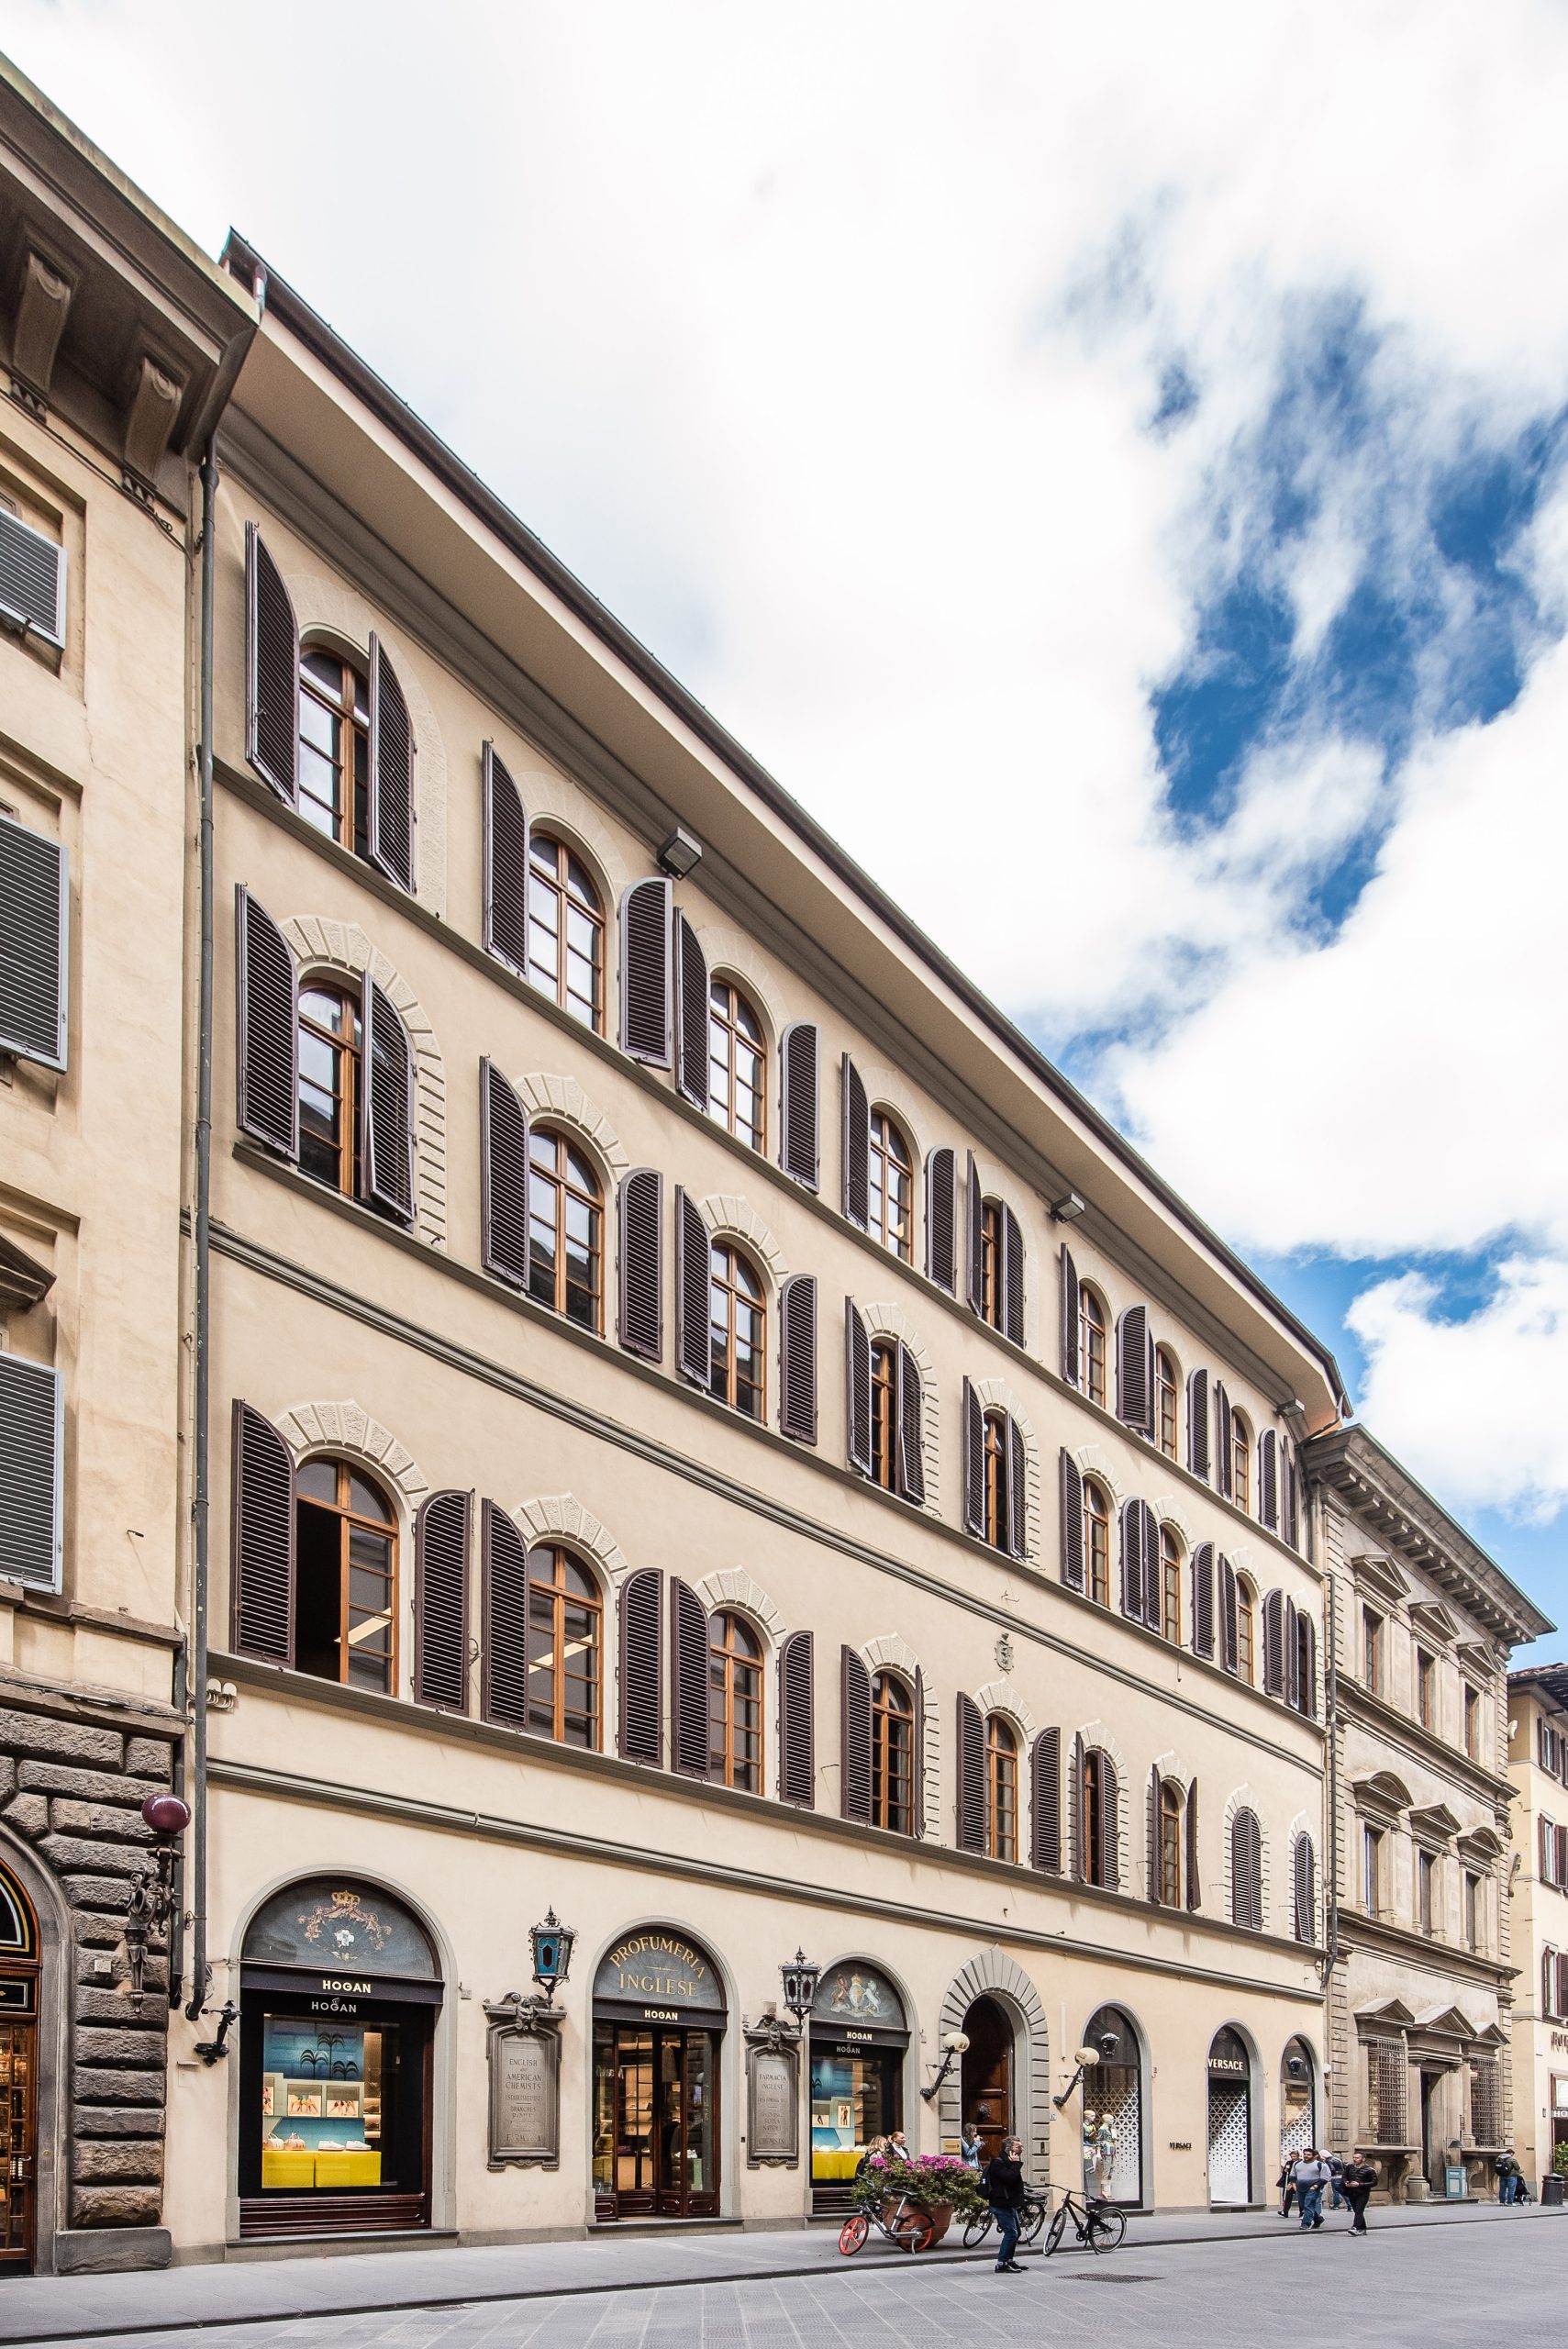 Building facade in Florence